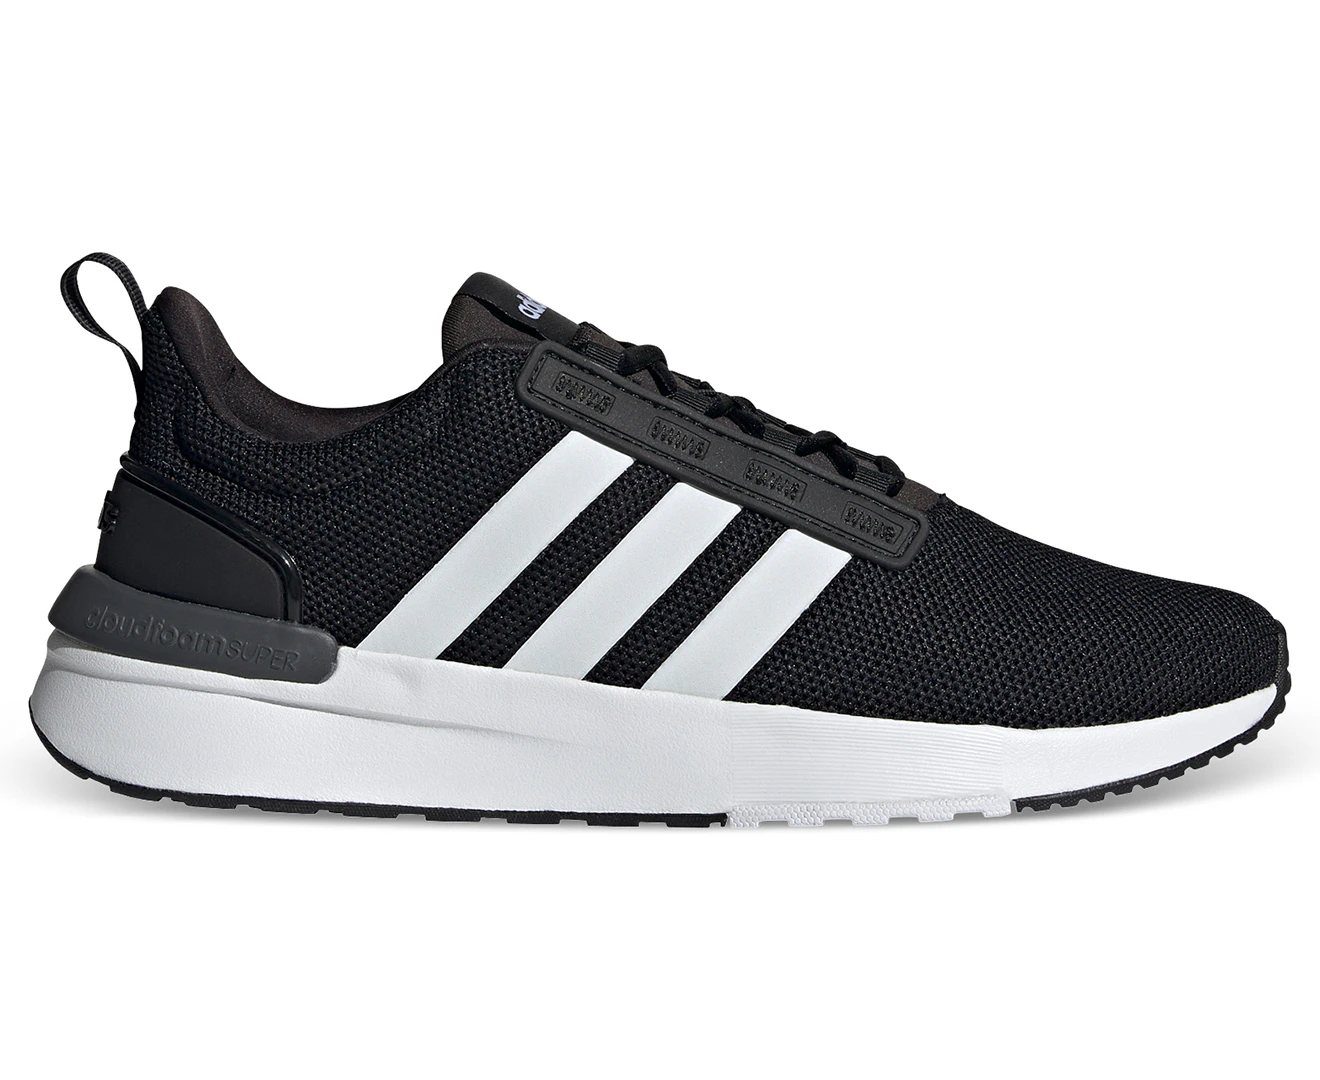 Adidas Men's Run Sneakers - Black/White/Grey Www.catch.com.au